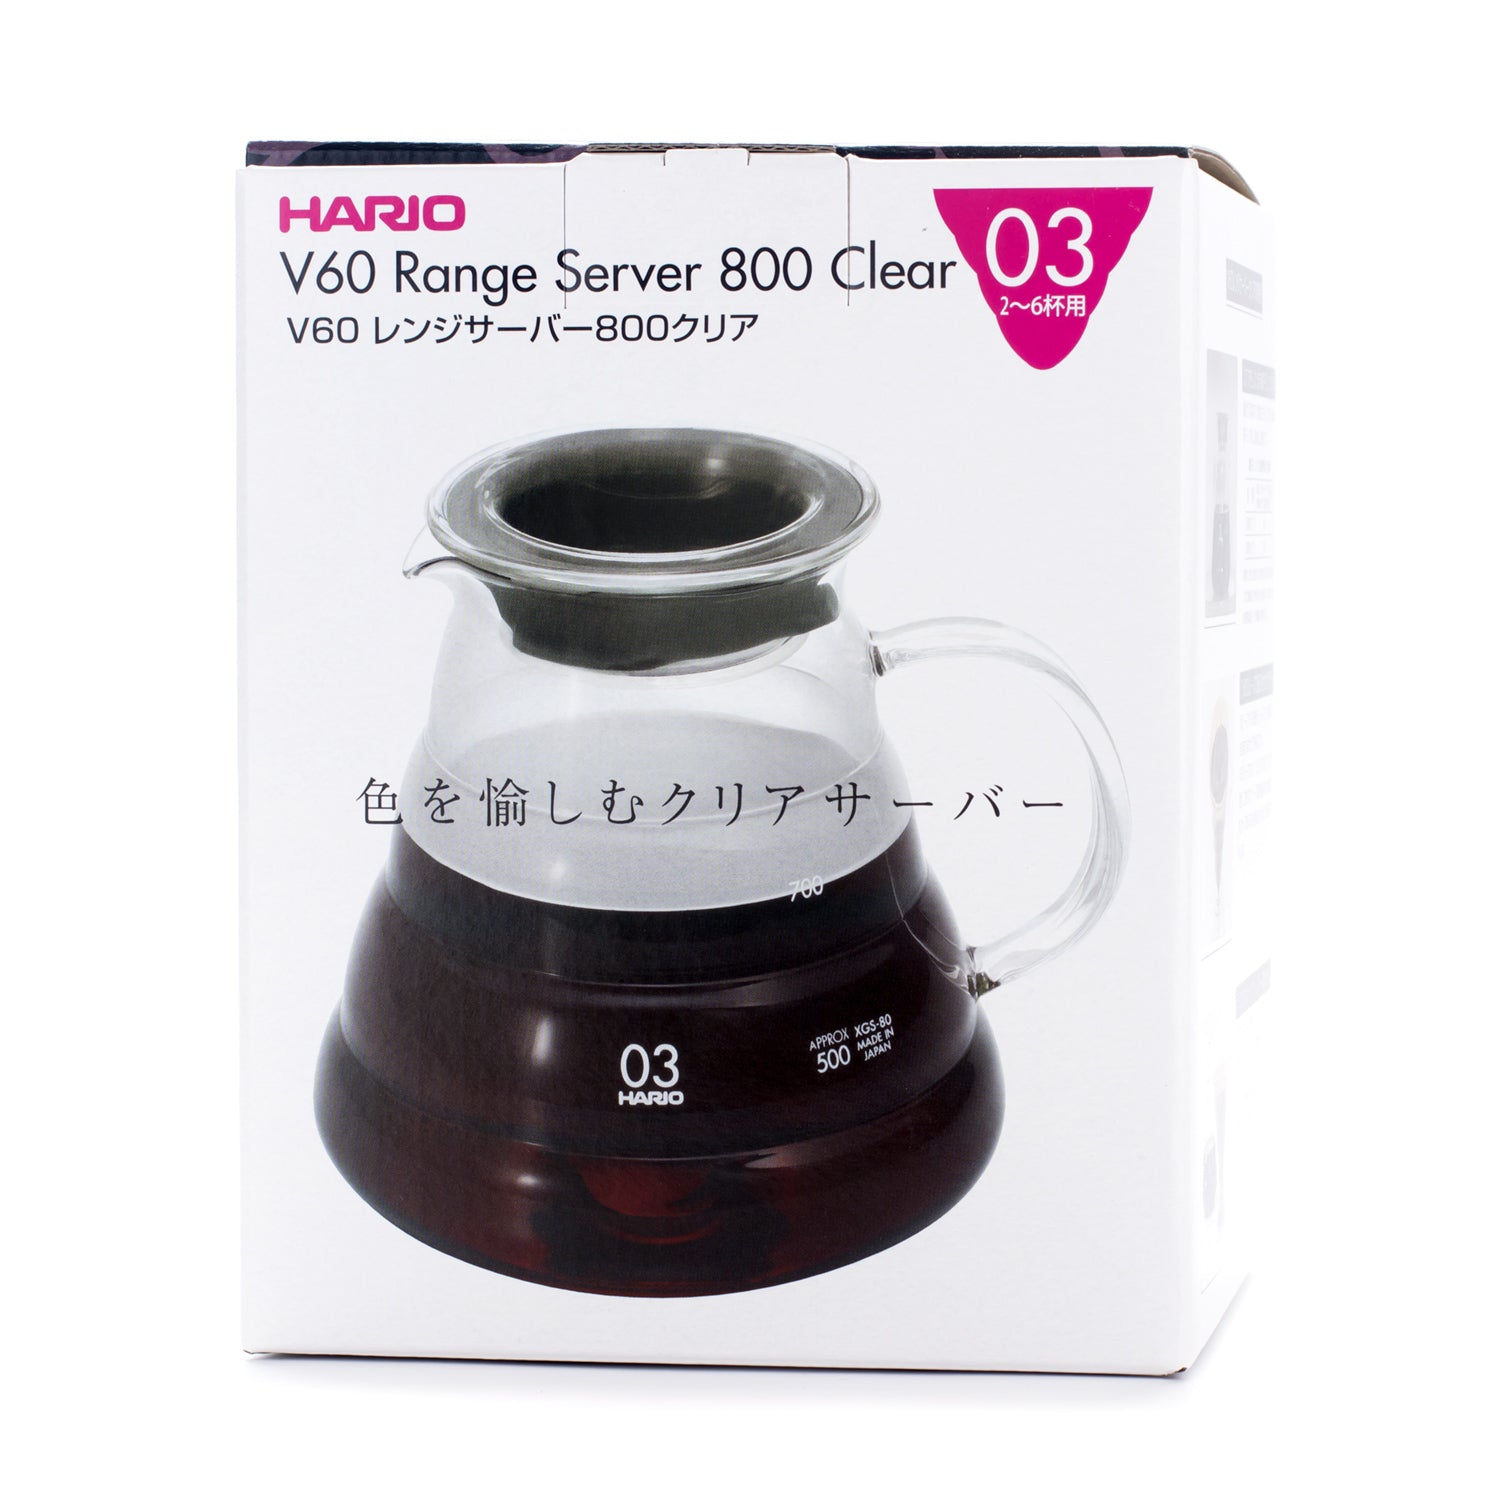 Hario Range Server V60-03 - 800ml - فولت VOLT